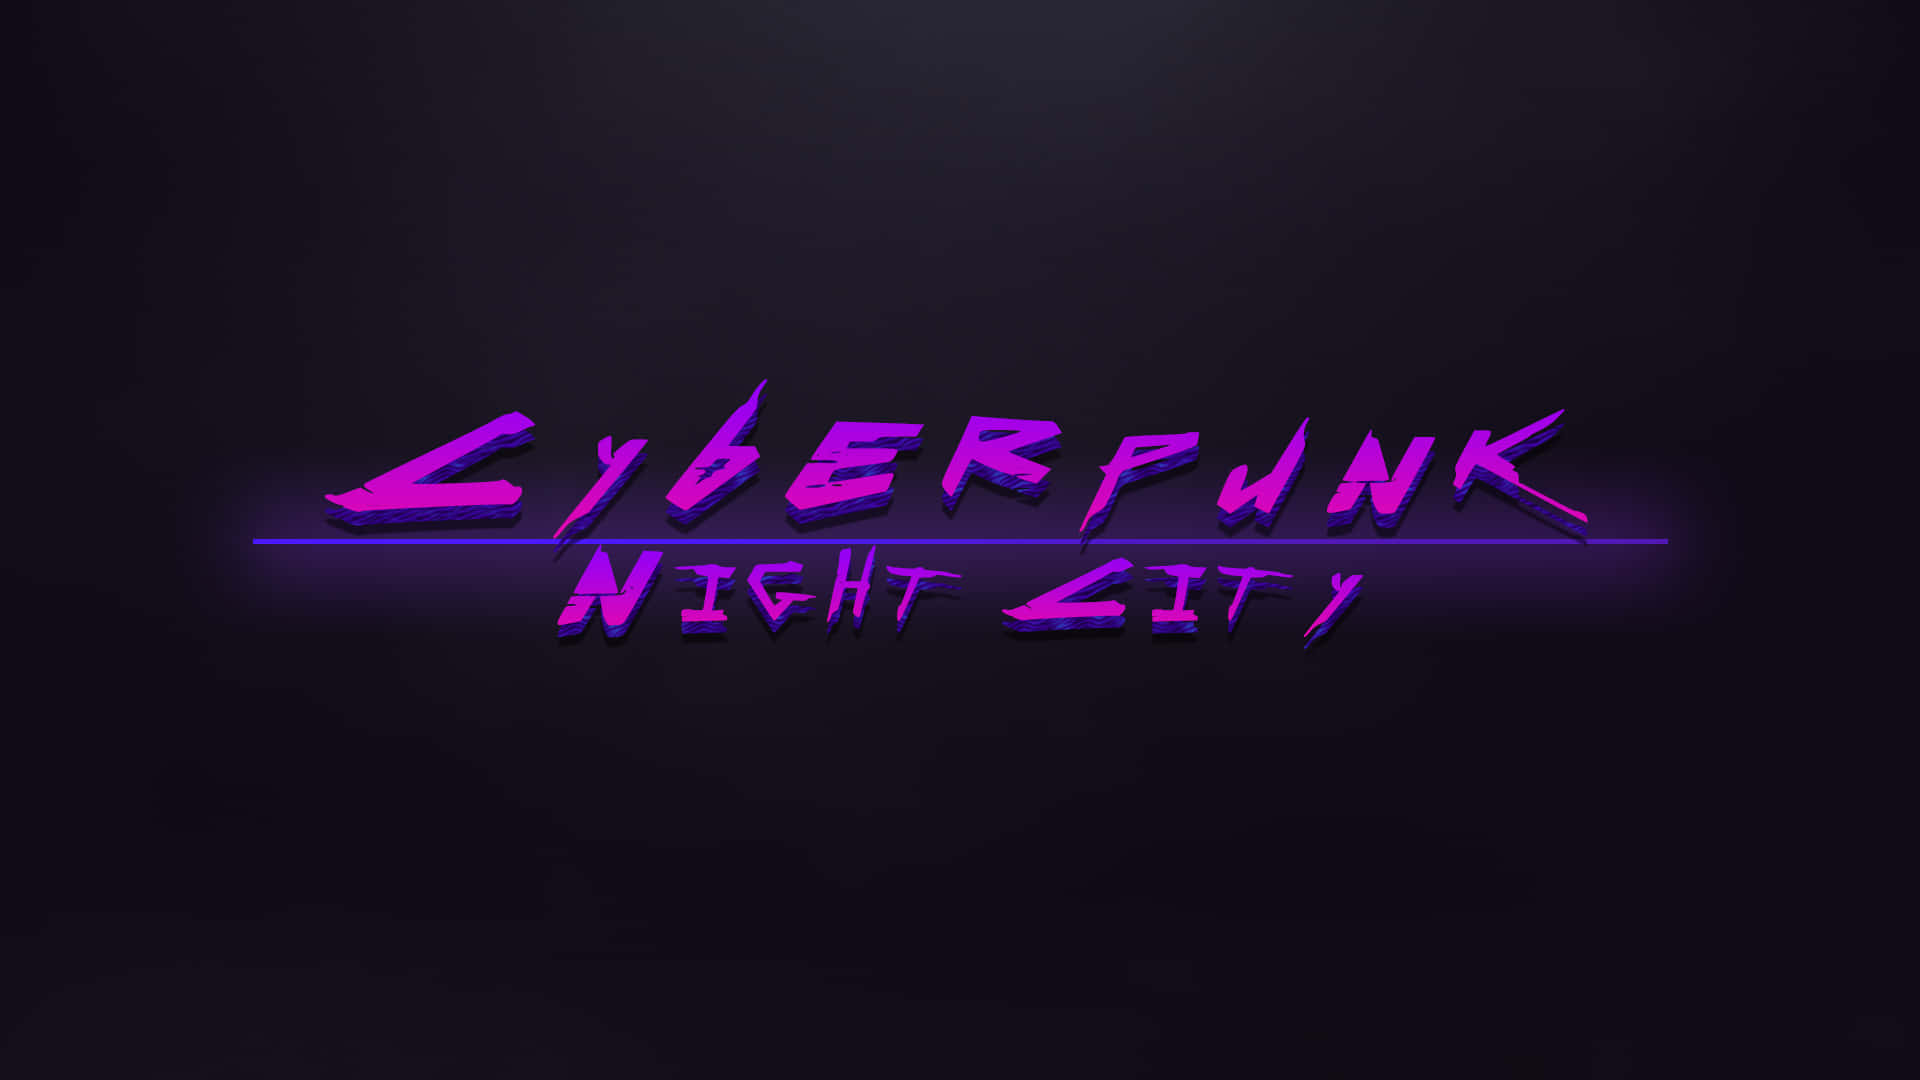 Cyberpunk Night City Hd Wallpaper